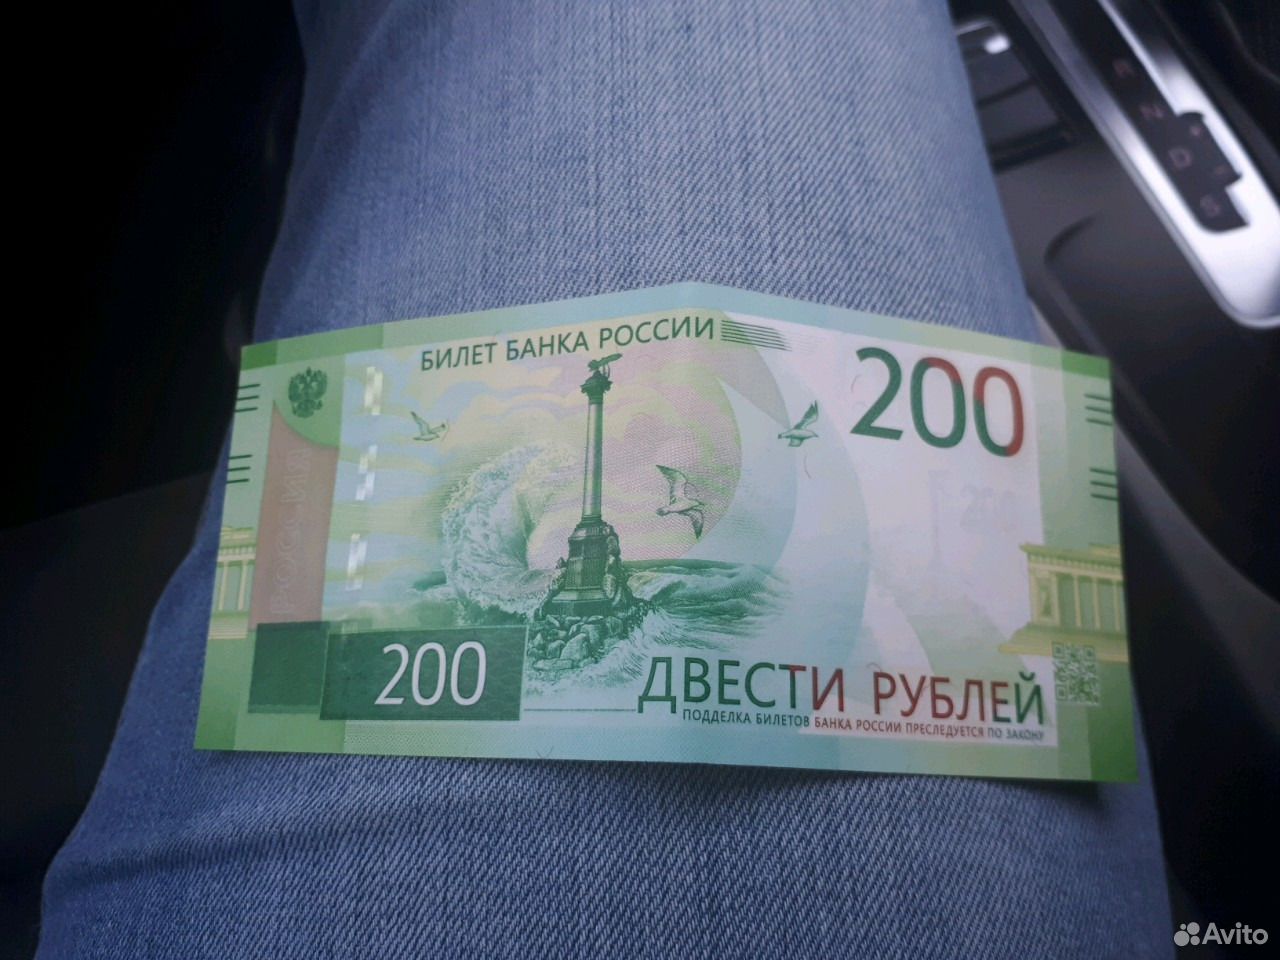 200 рублей продажа. 200 Рублей. Банкнота 200. Купюра 200 рублей. 200 Рублей банкнота.